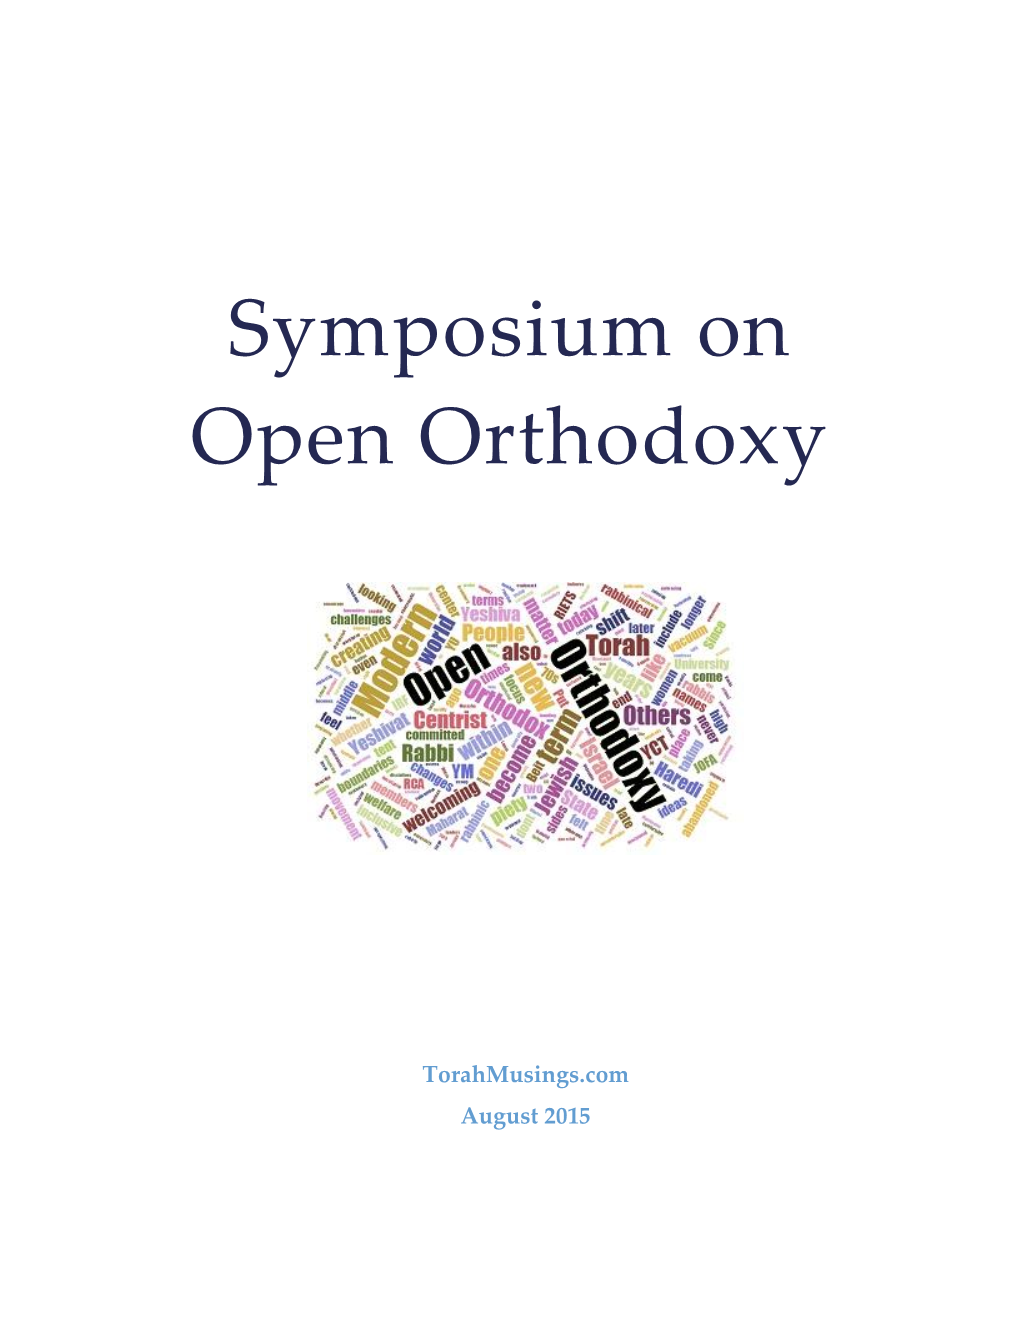 Symposium on Open Orthodoxy